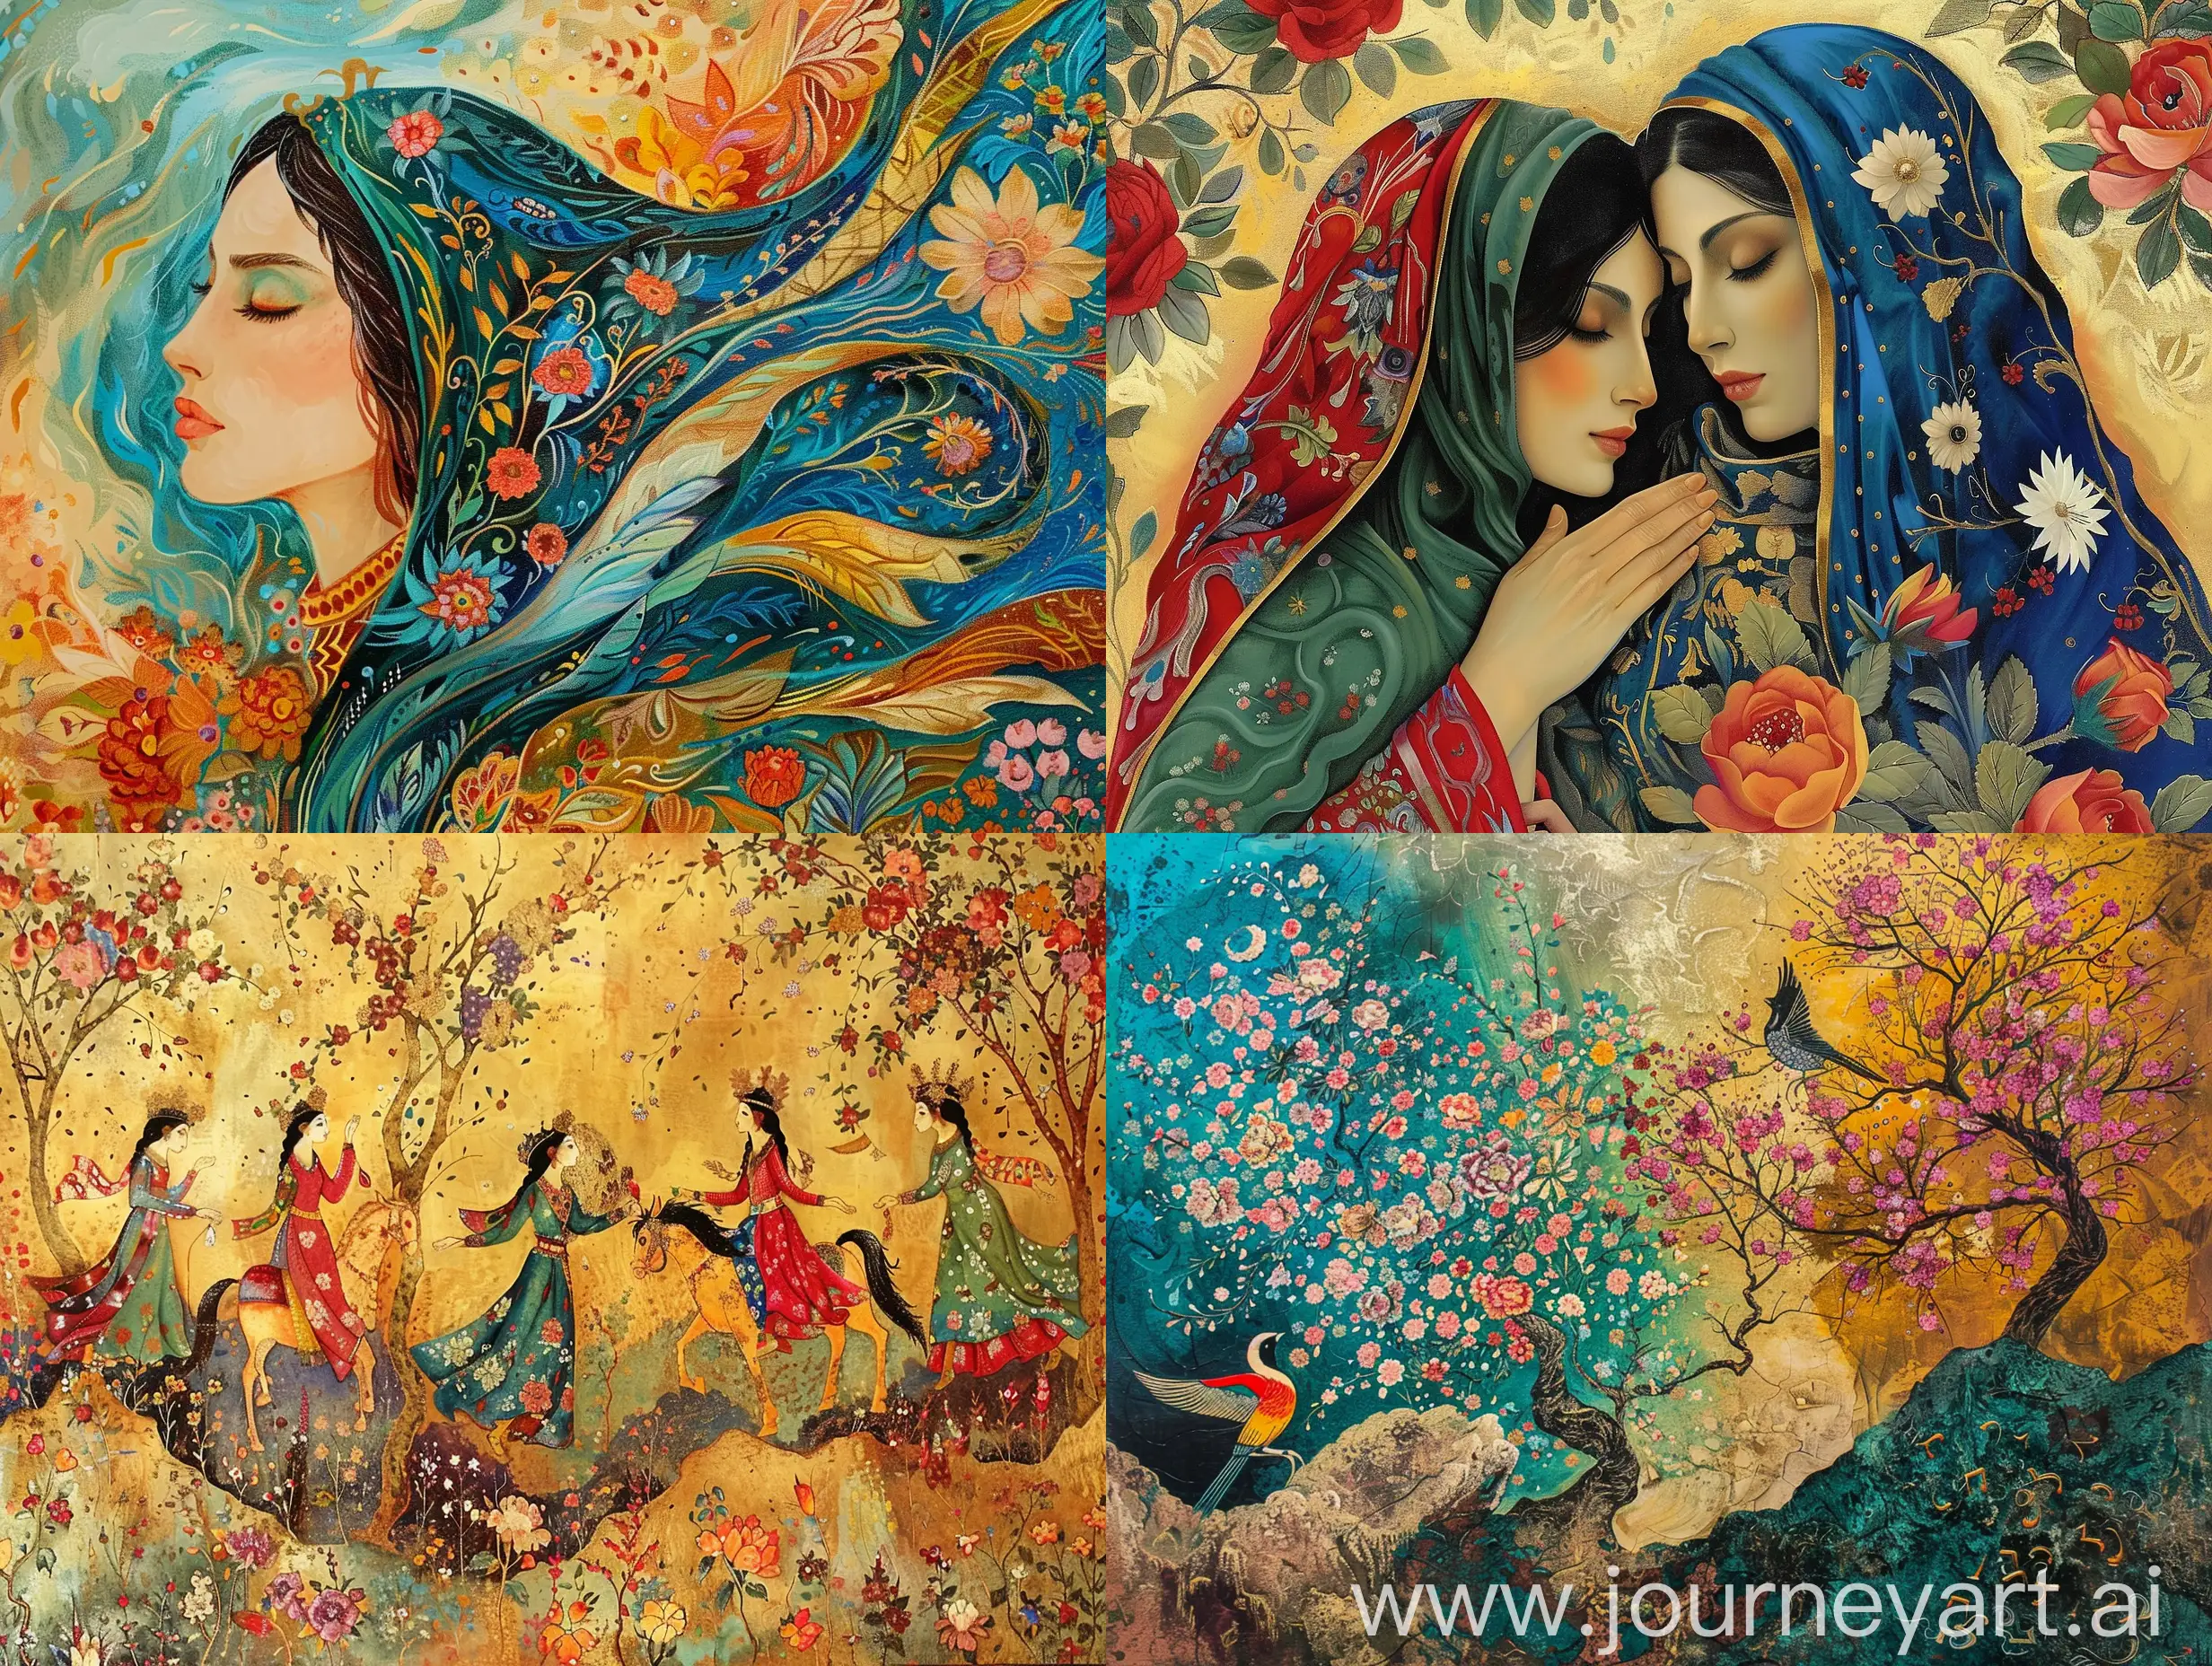 Iranian traditional paint 
Ghazal